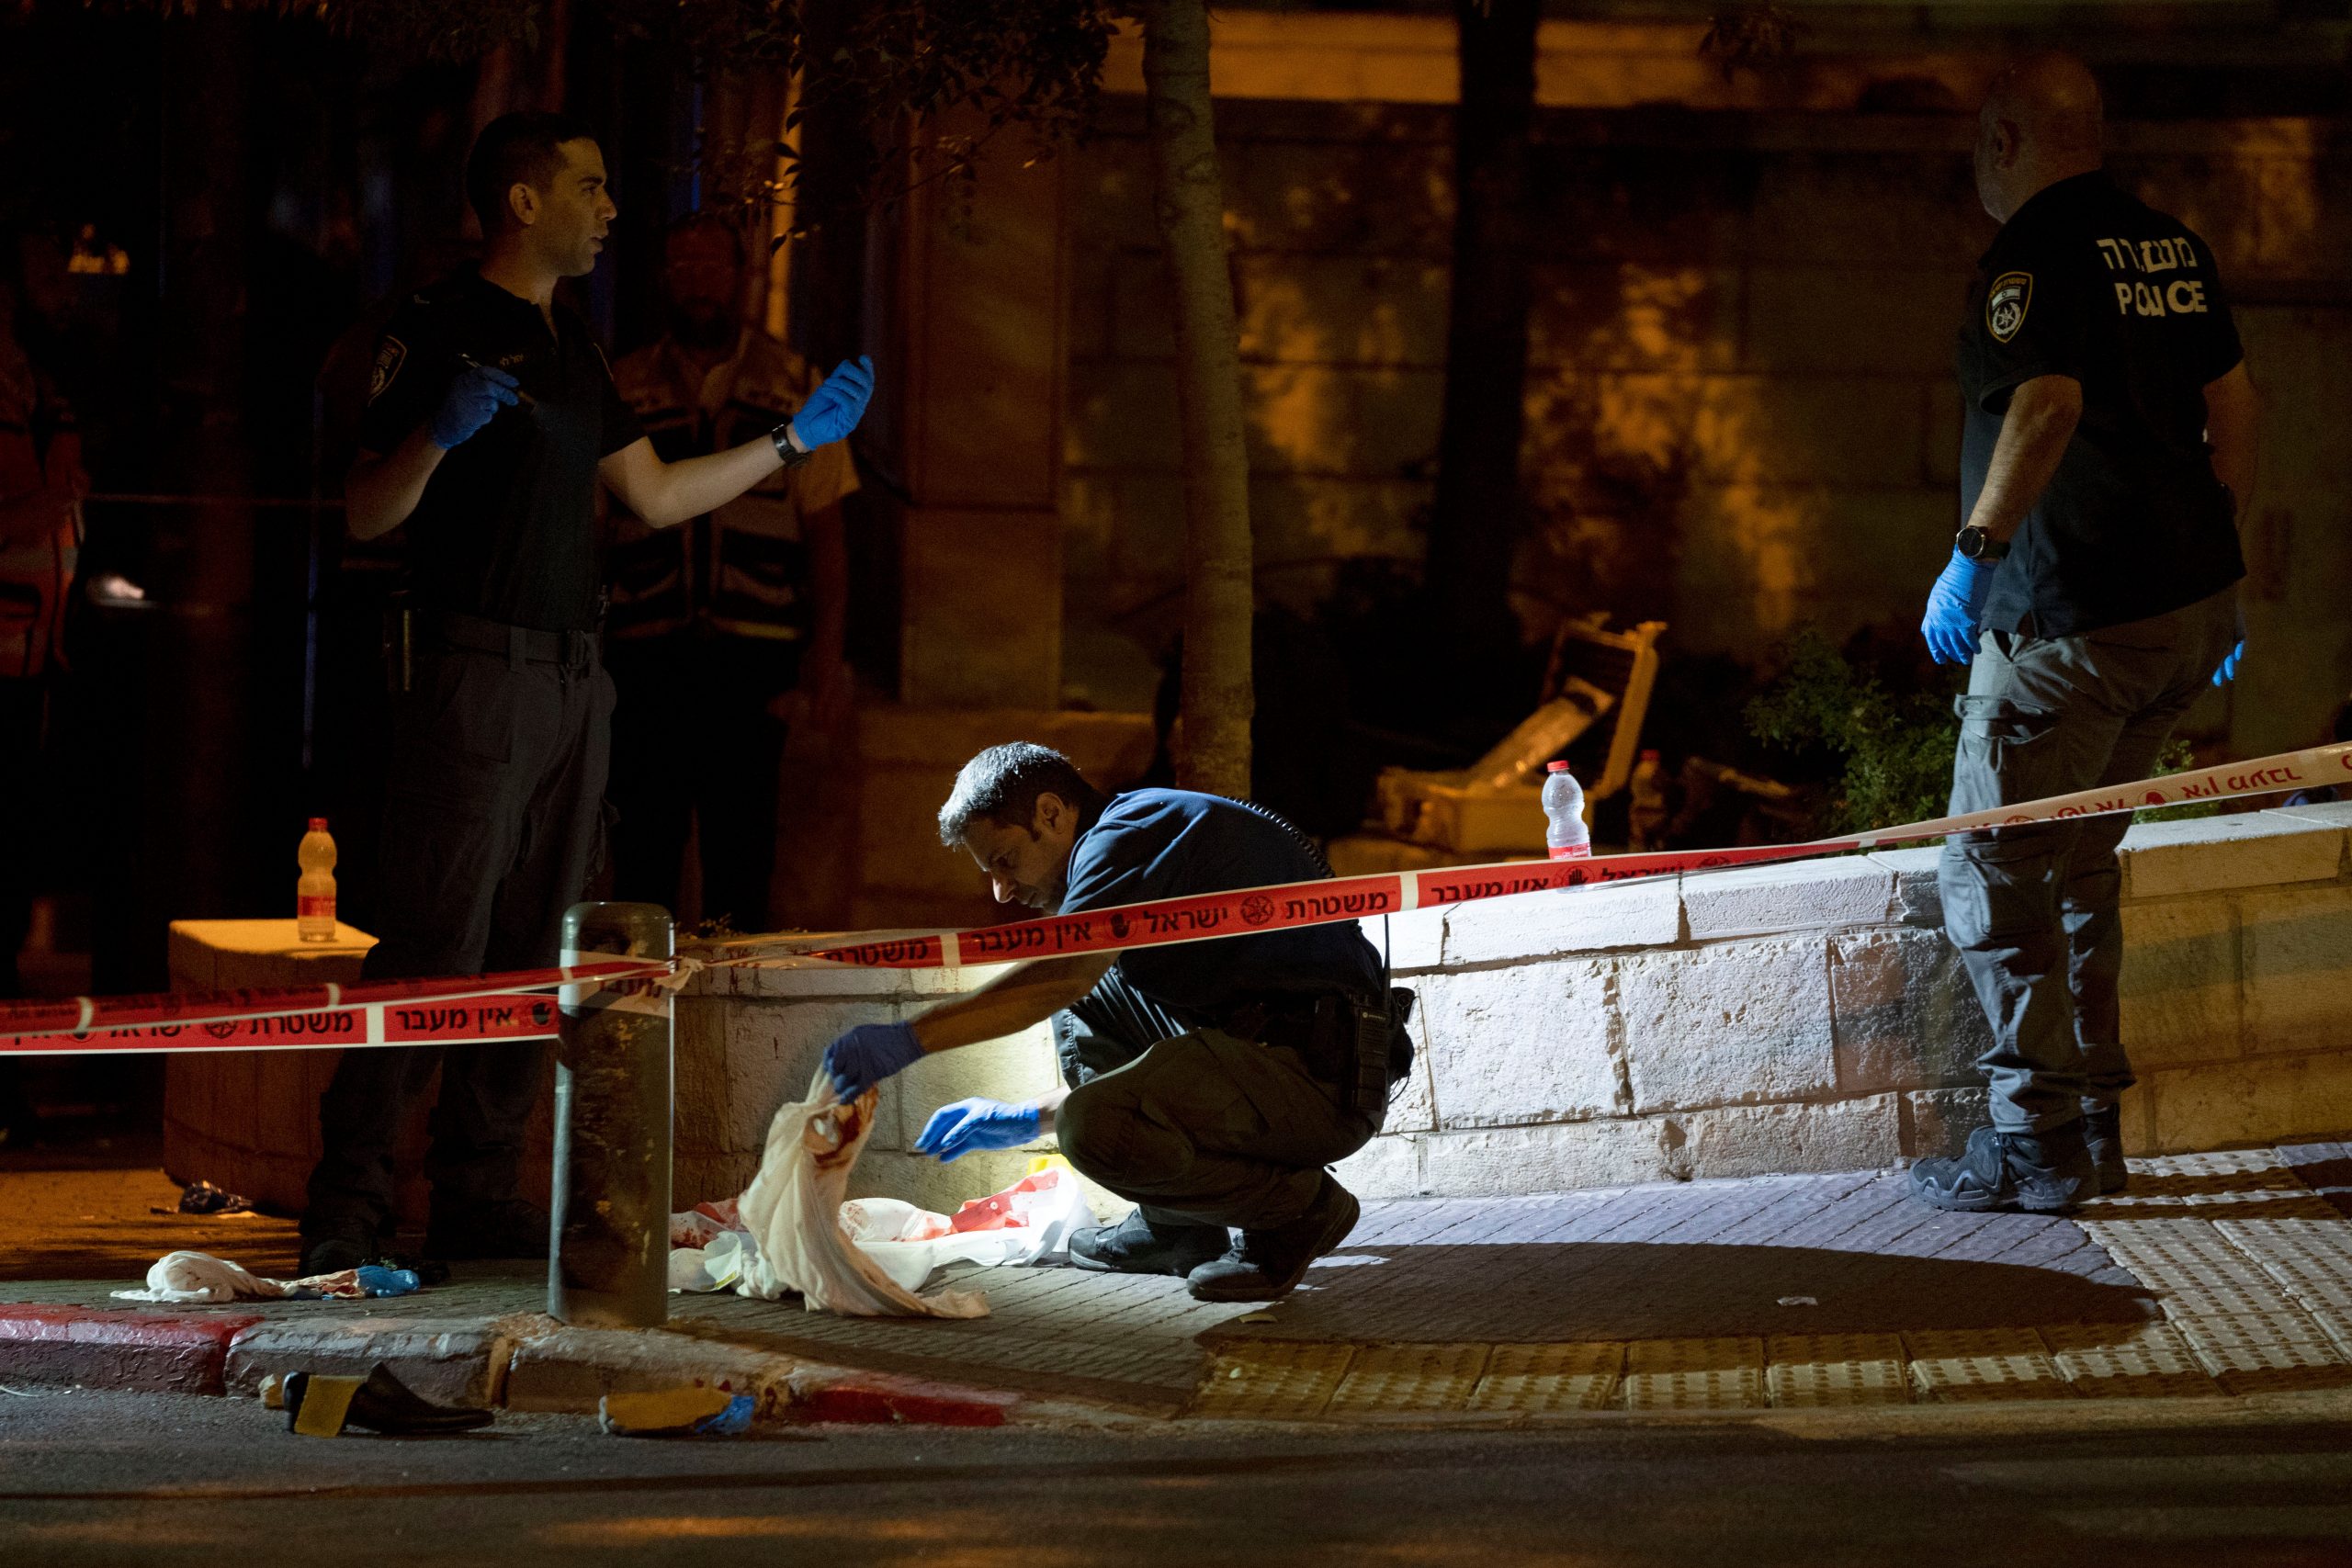 Jerusalem shooting leaves 8 Israelis wounded